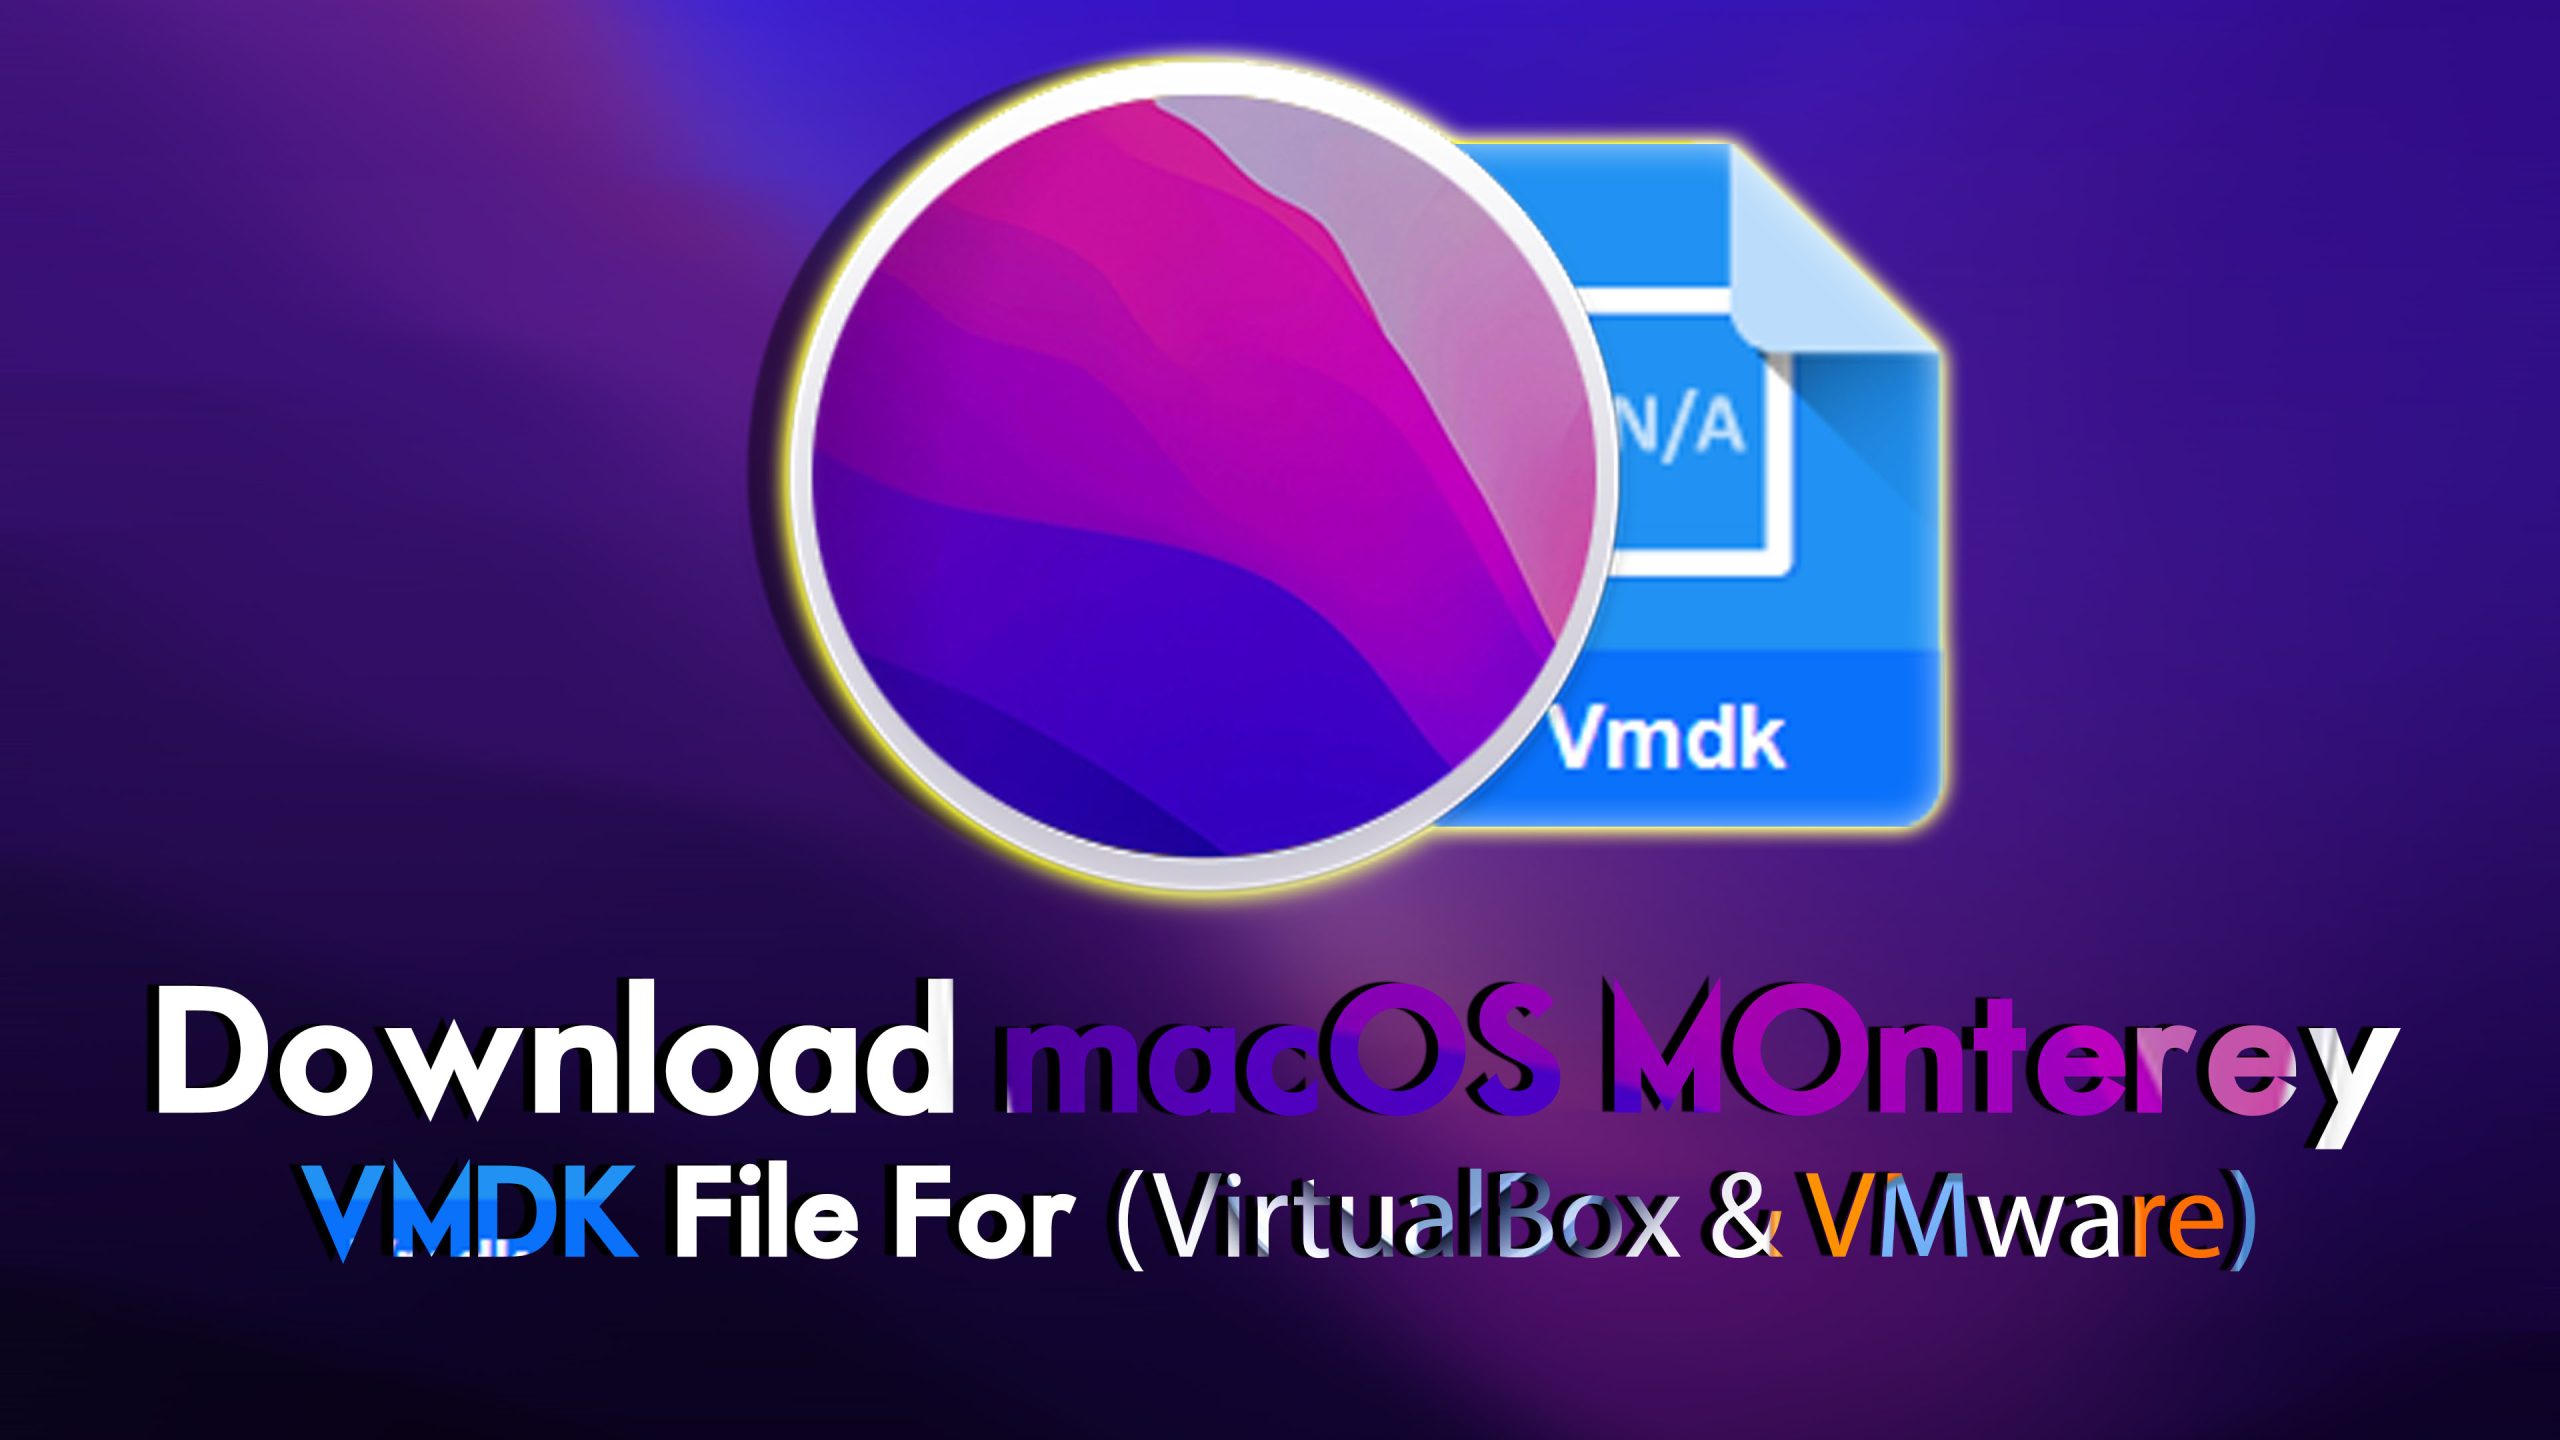 macos monterey download for virtualbox